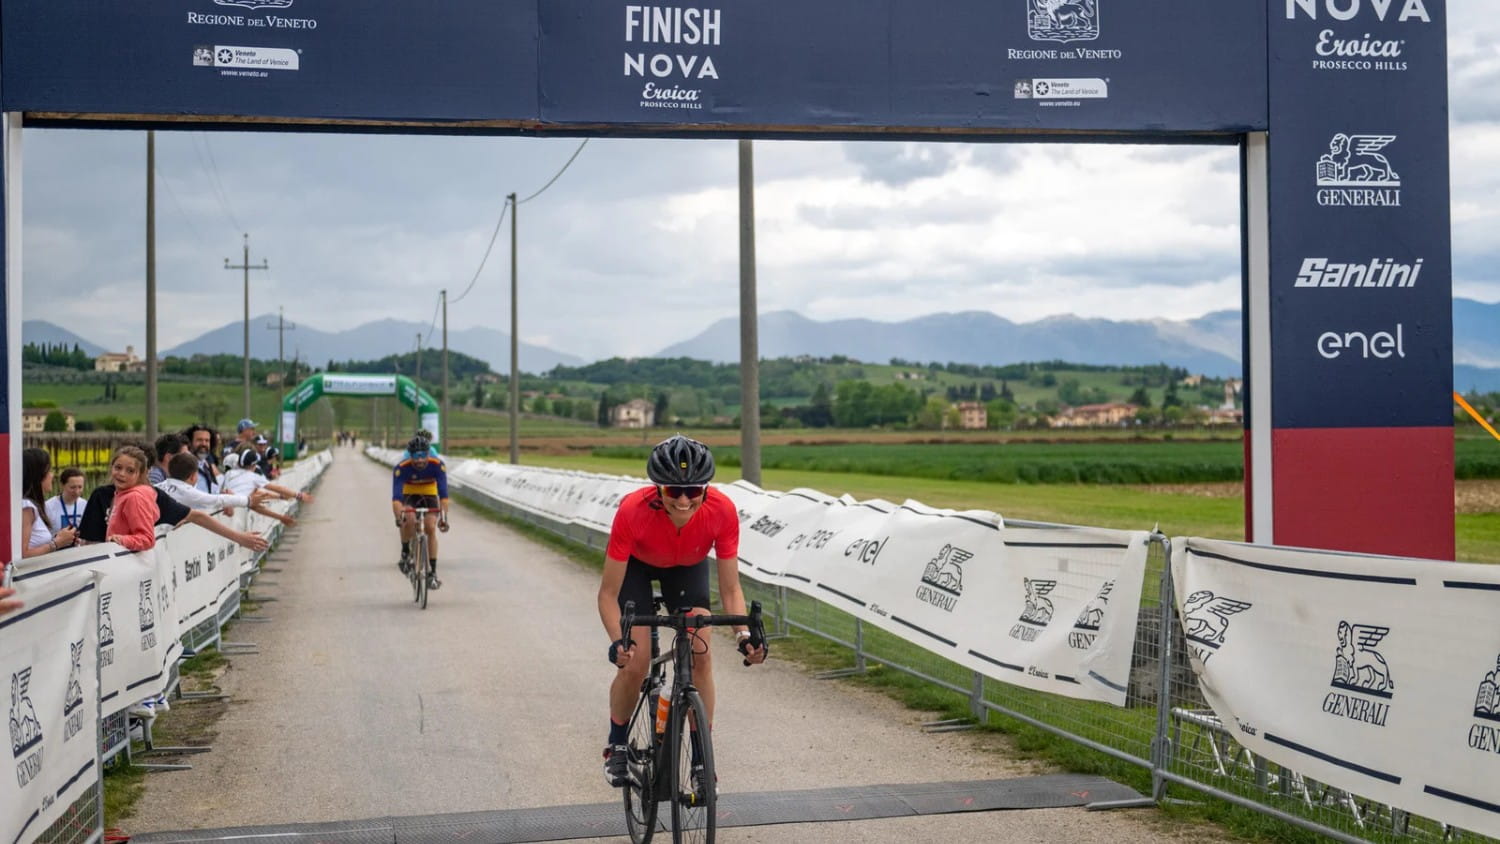 Nova Eroica-Bike-Tour-Finish-Line